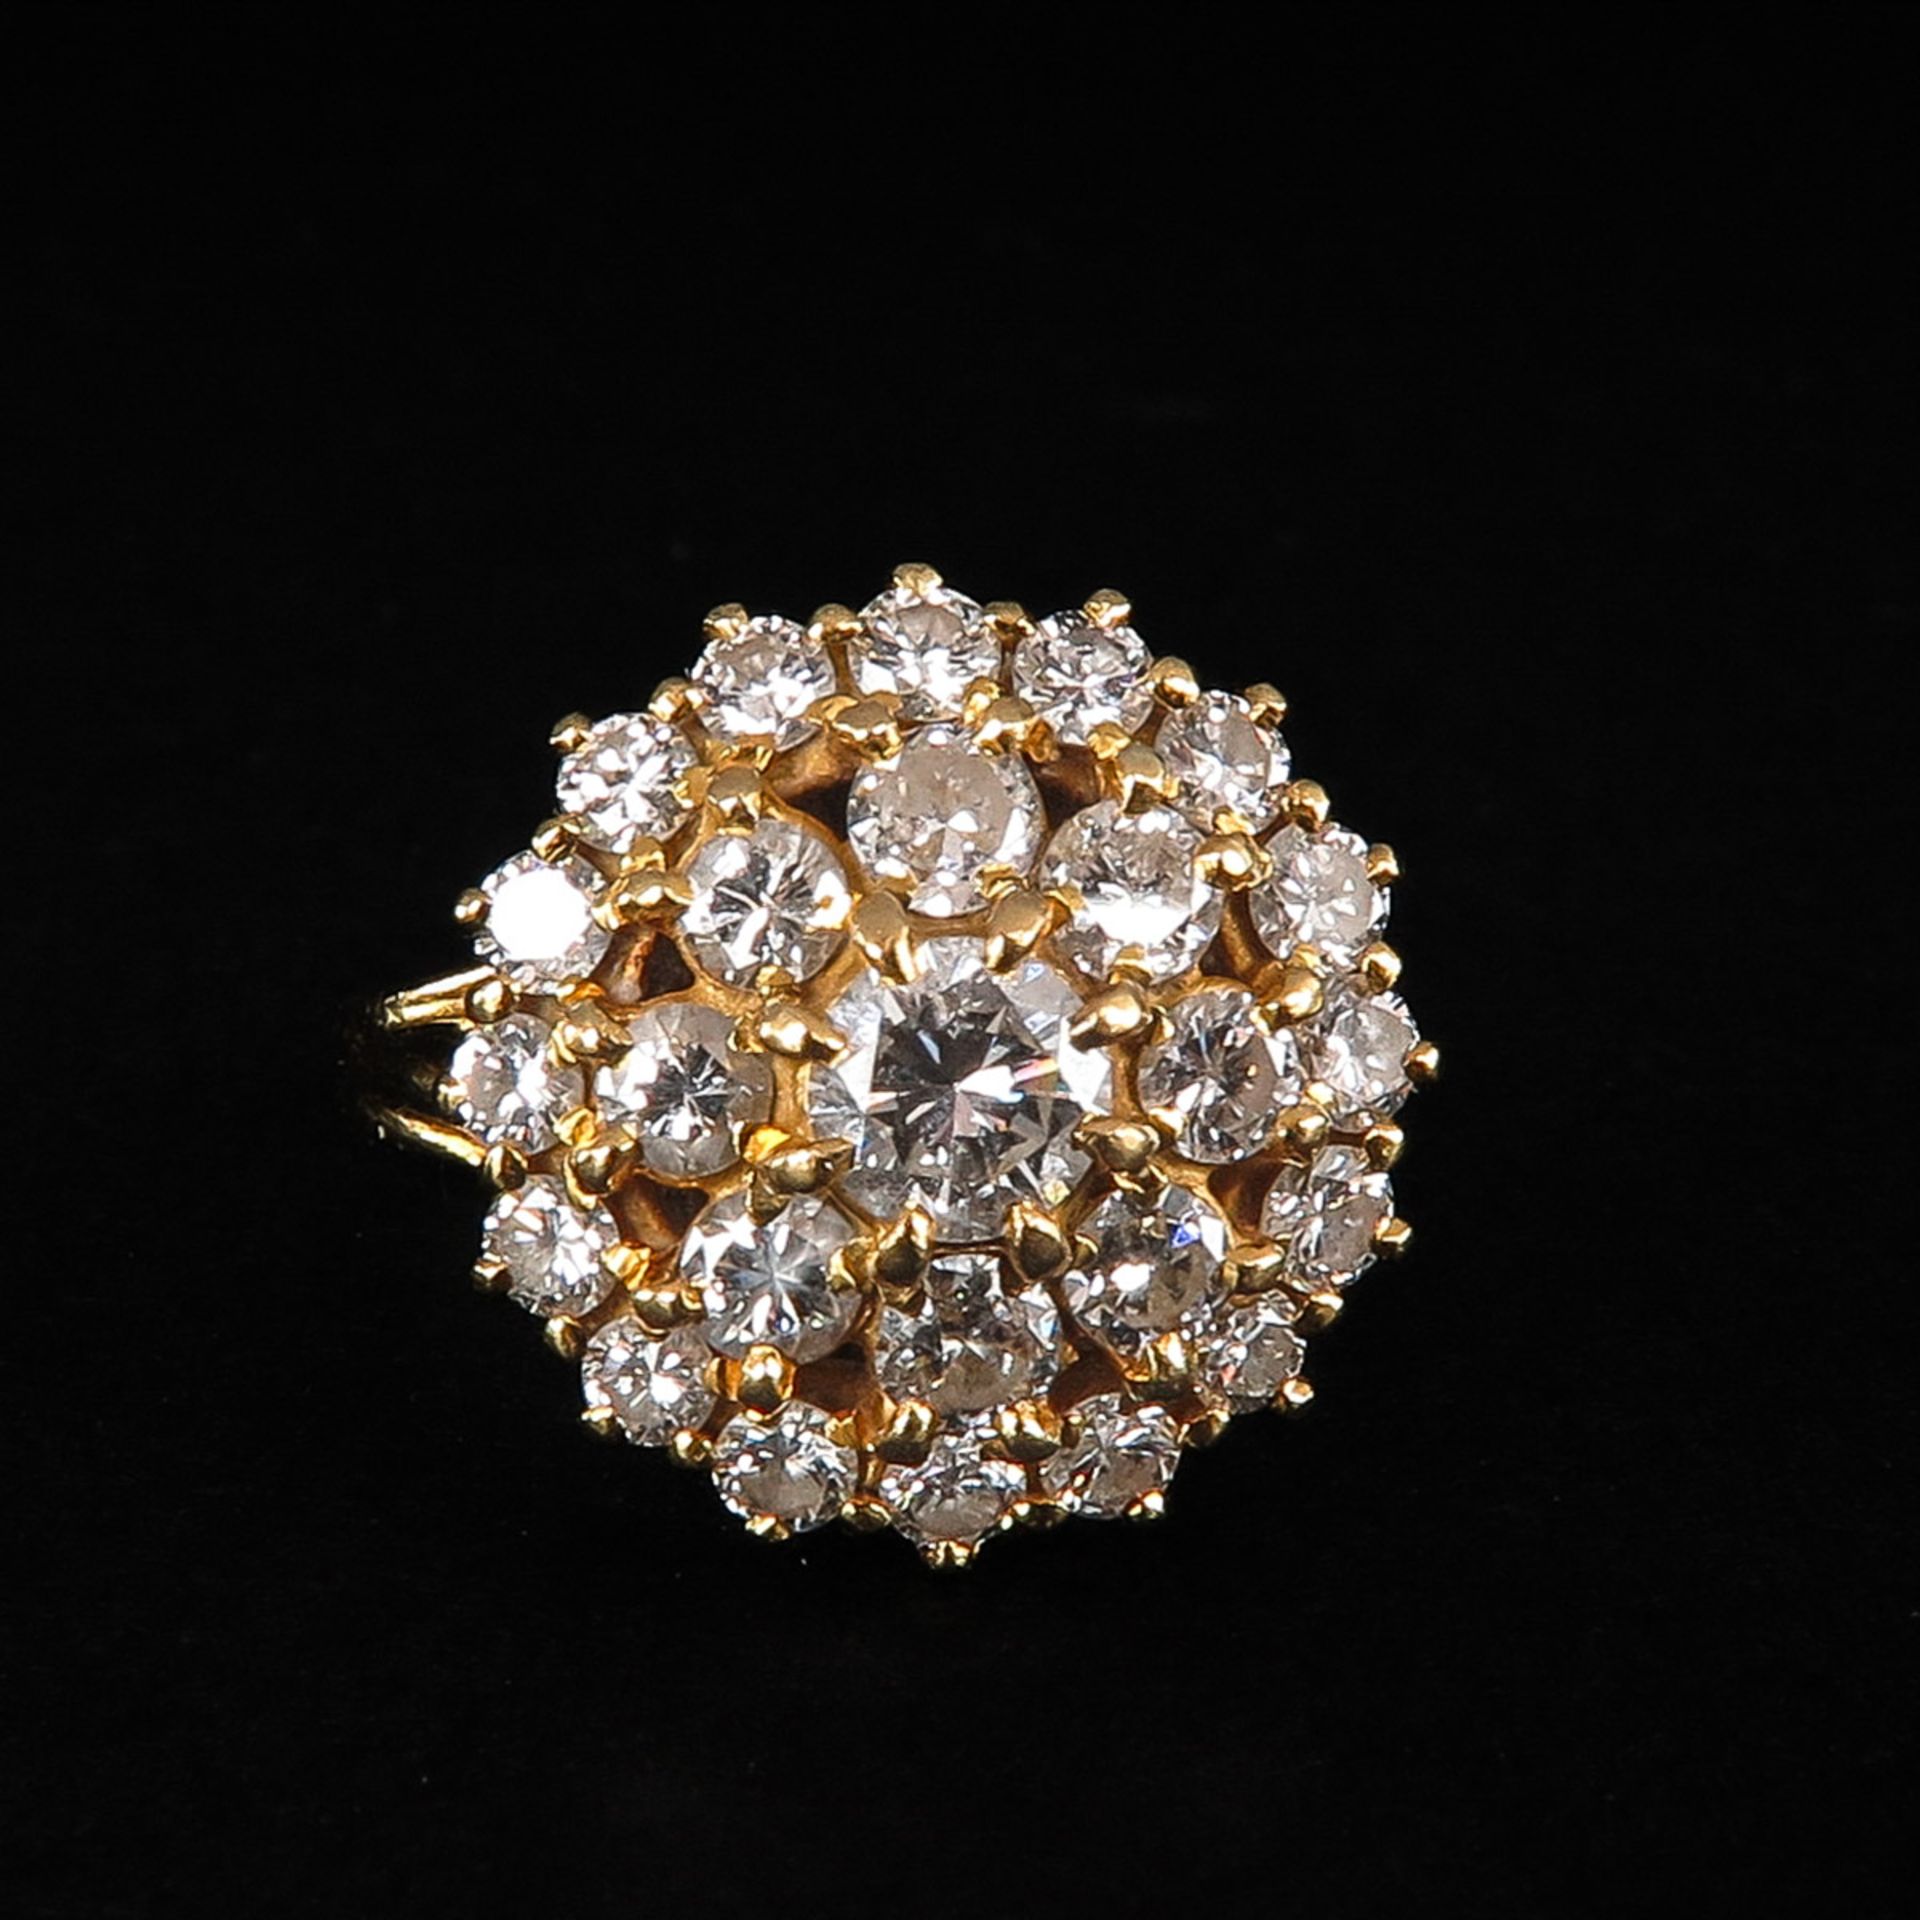 A 22KG Ladies Diamond Ring - Image 2 of 4